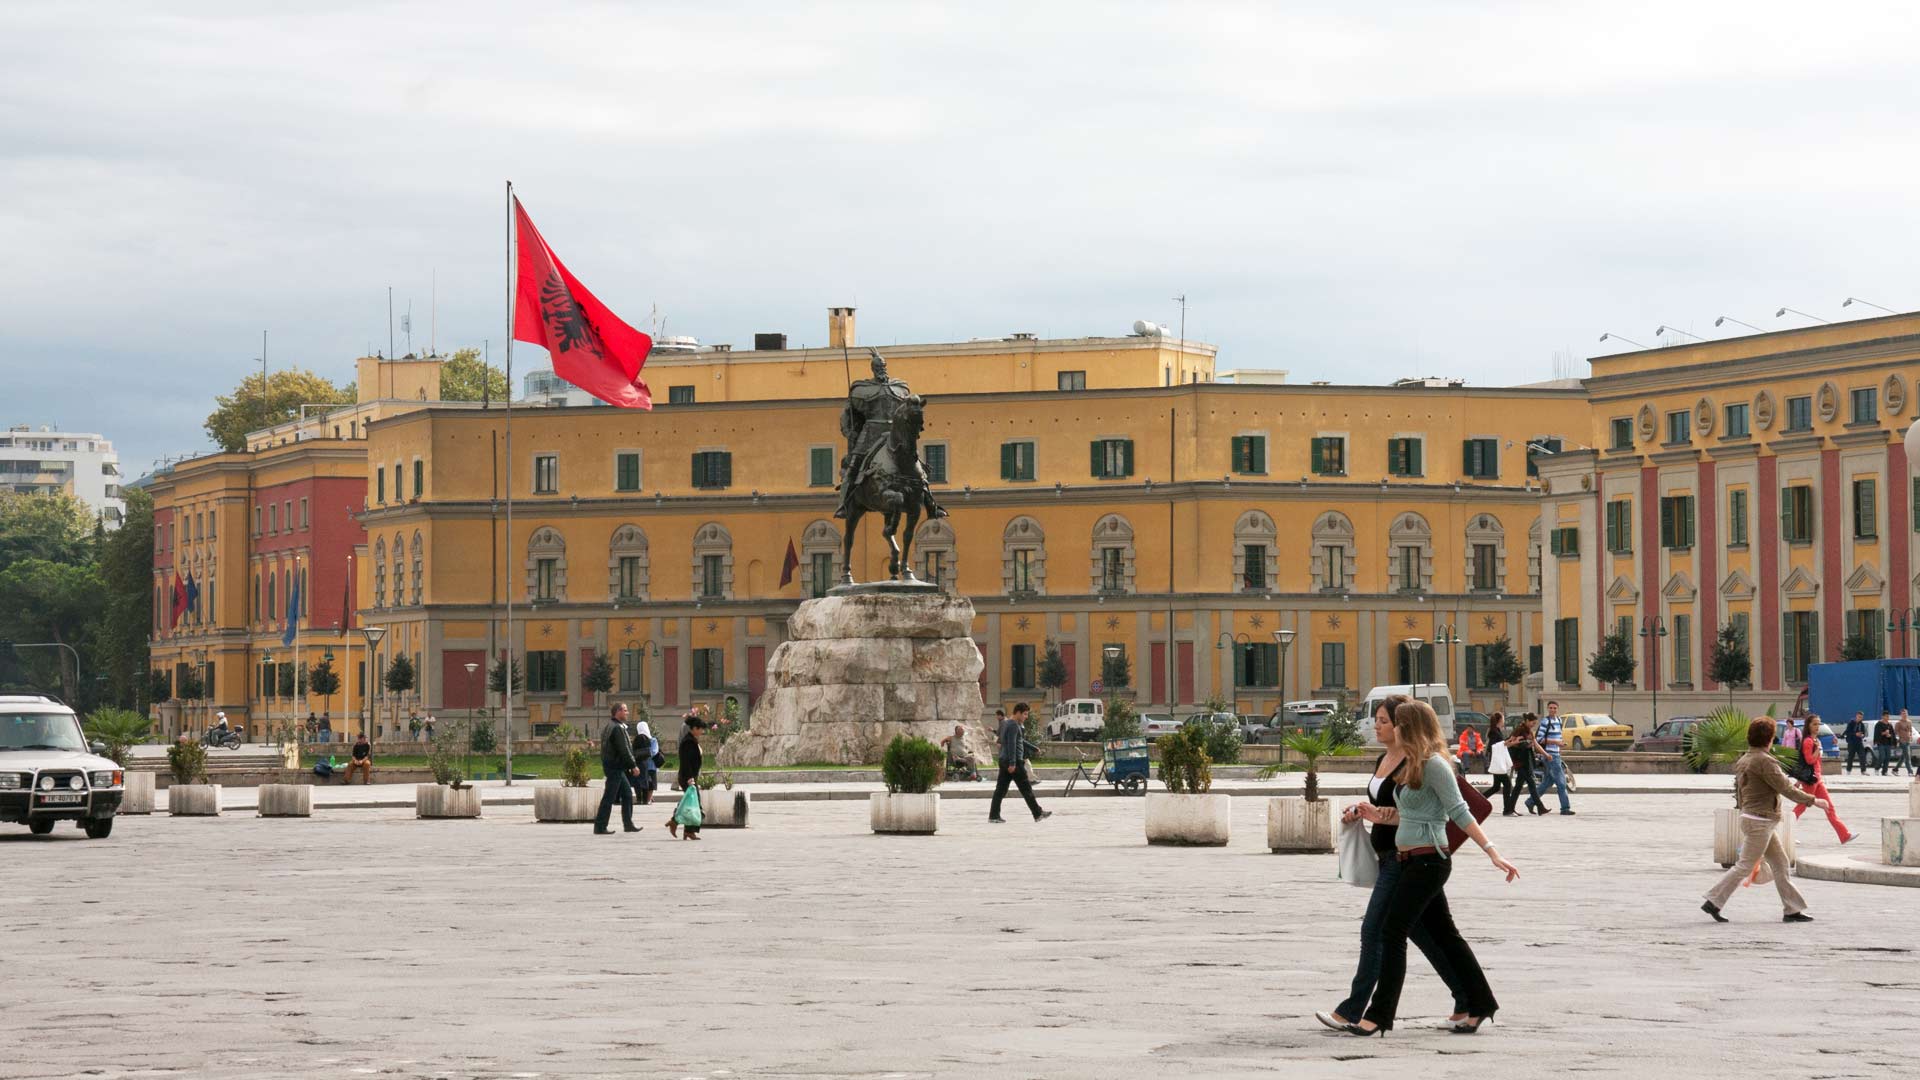 Equestrian statue of Gjergj Kastrioti Skanderbeg on Skanderbeg Square, Tirana, Albania